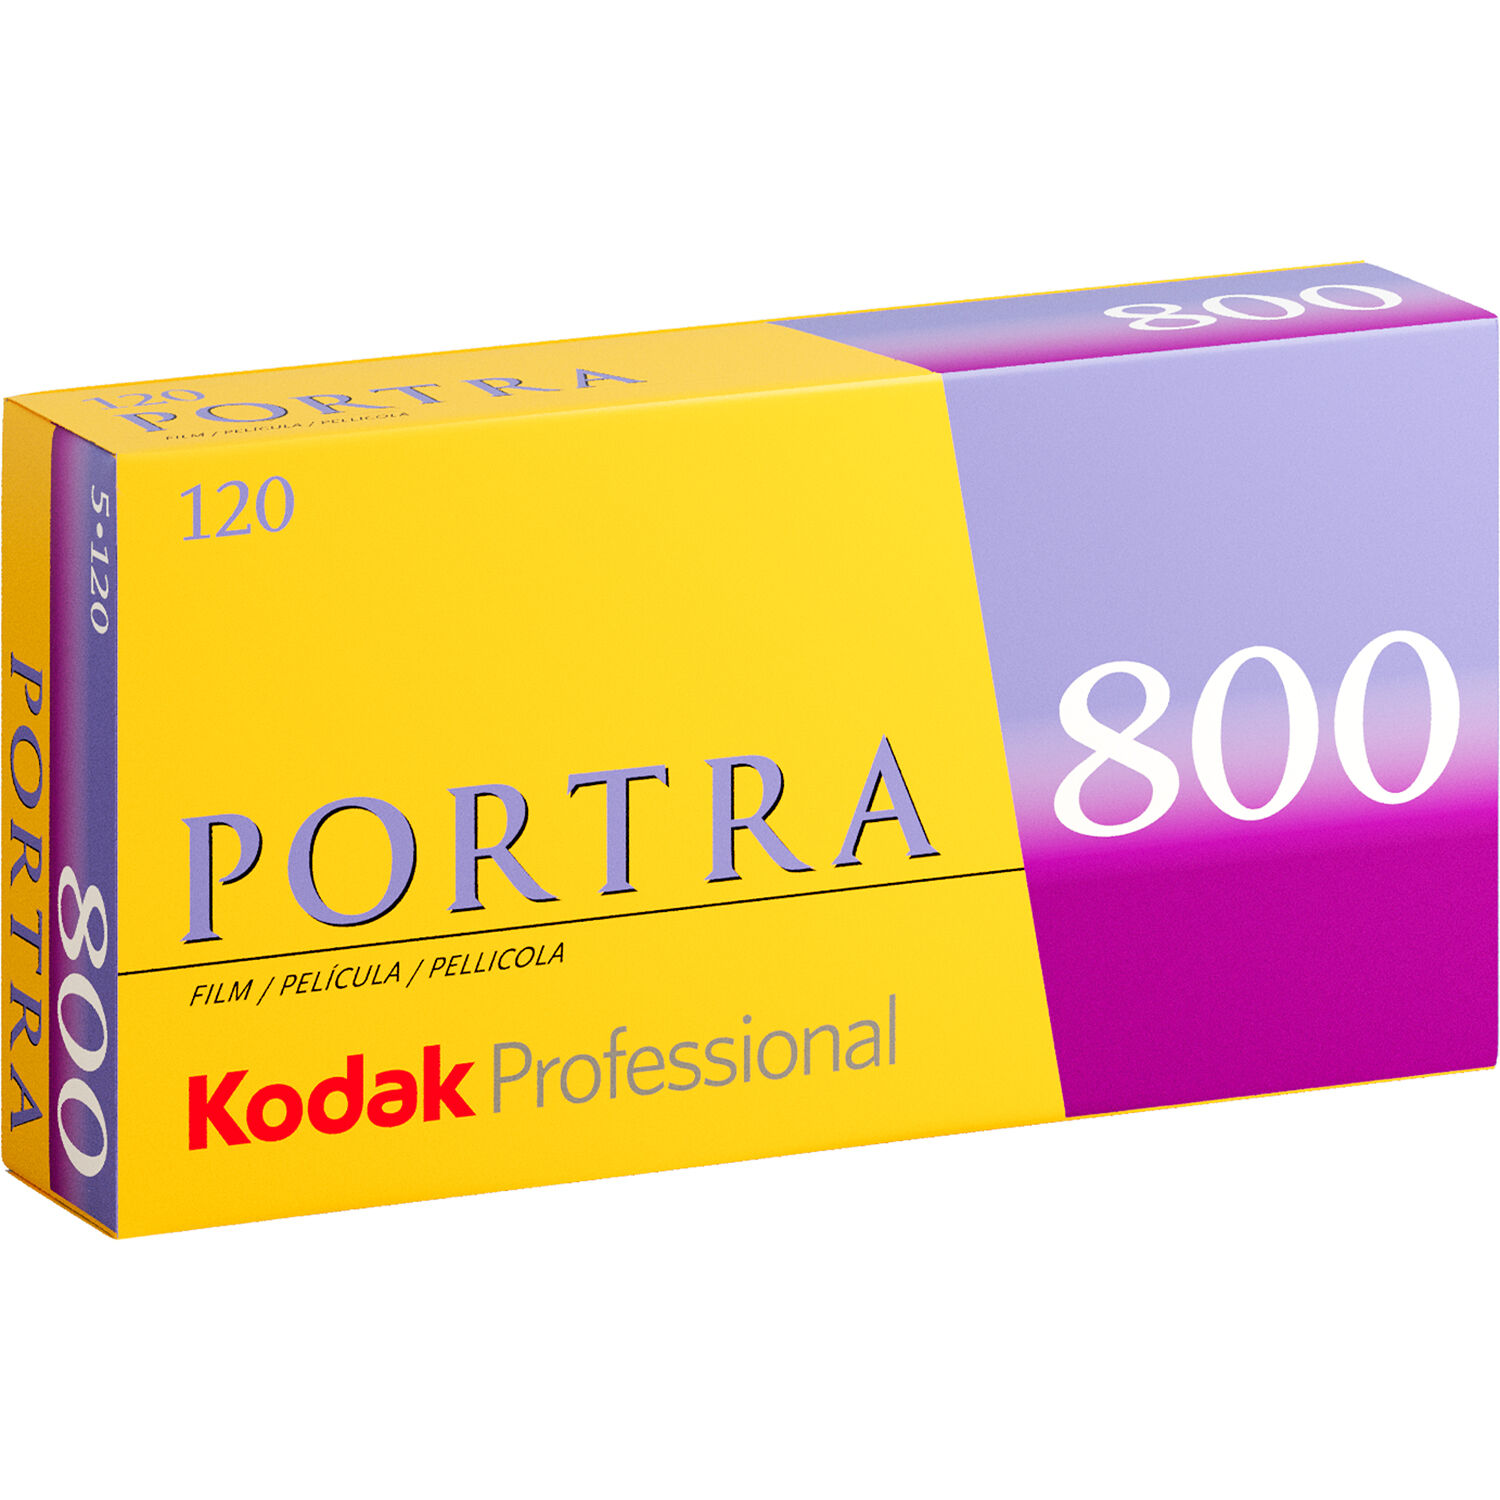 Kodak Portra 800 Color Negative Film Pro Pack (120 roll film, 5 rolls)